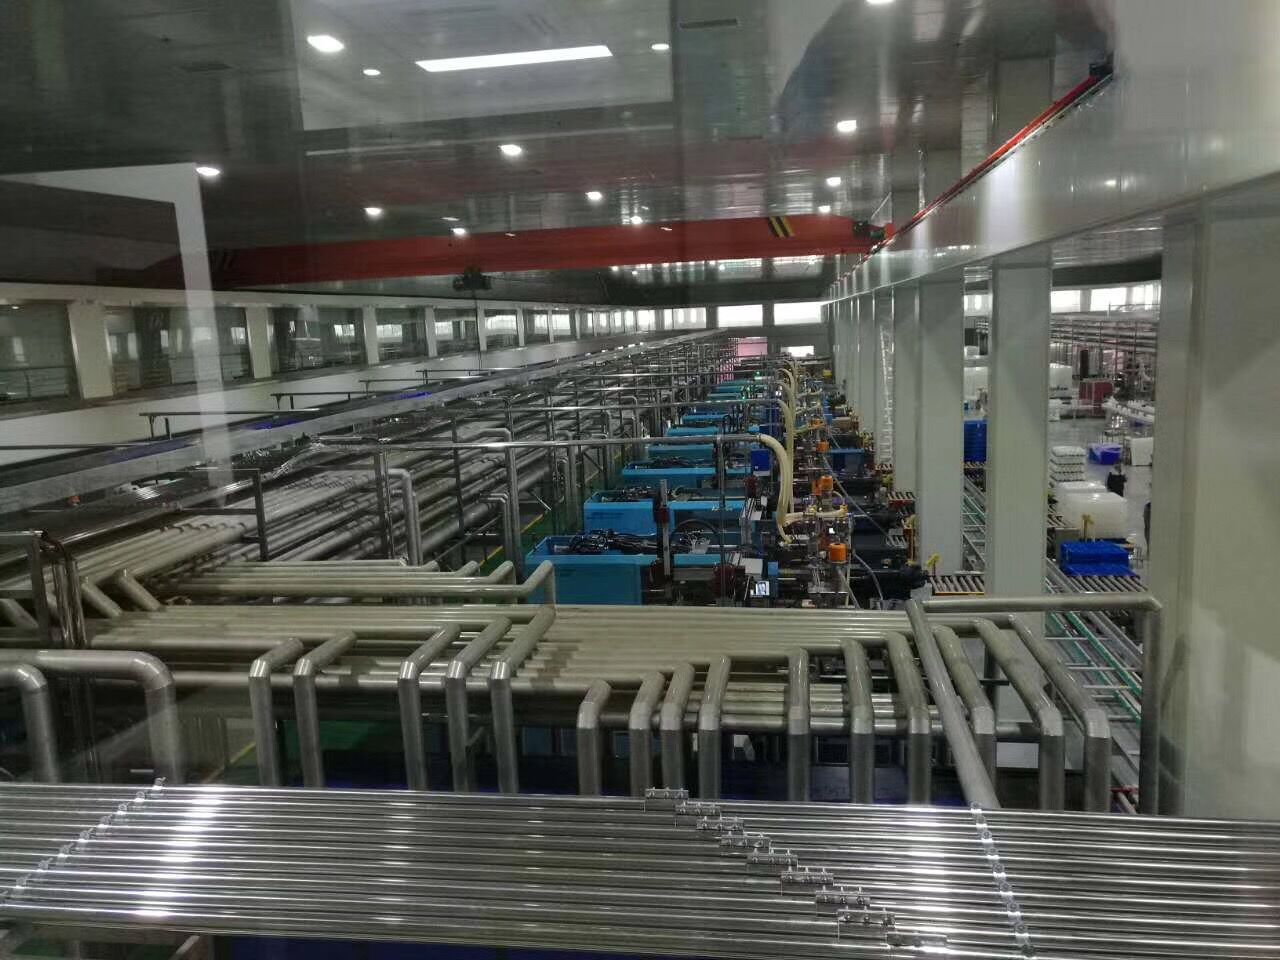 Central feeding system,Centralized feeding system,Central conveyor system ,Centralized conveyor system